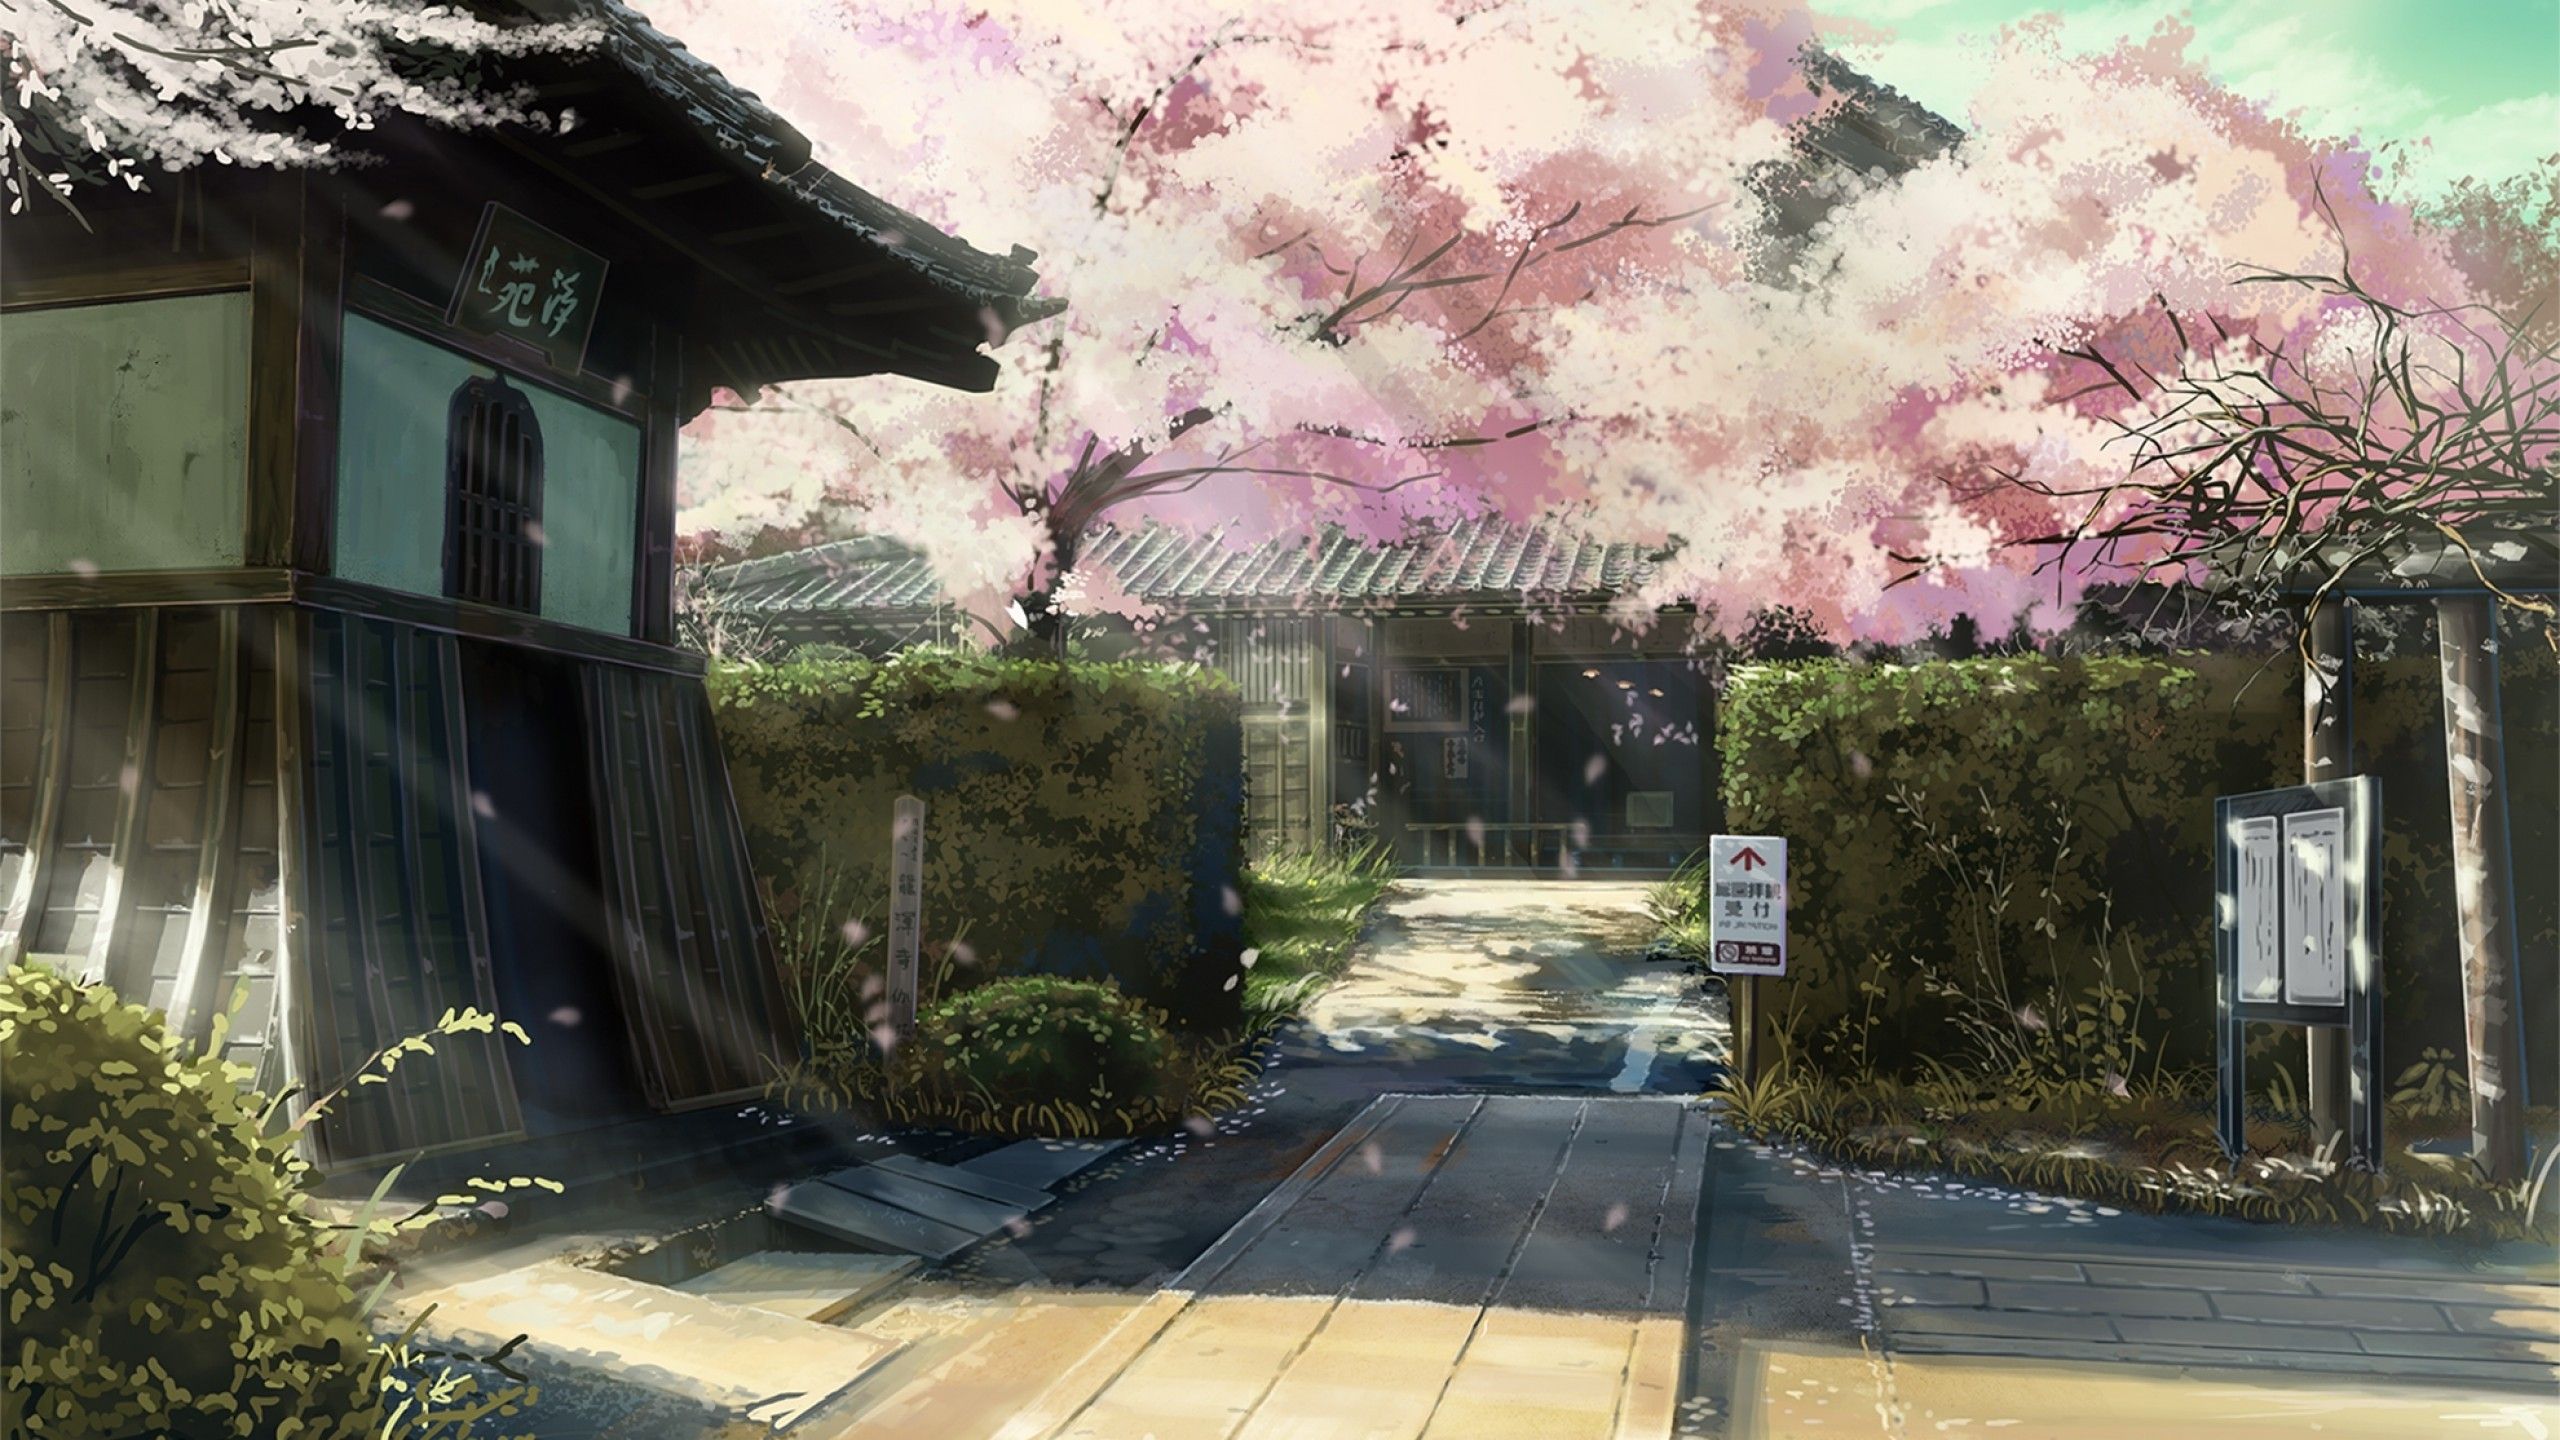 Download Japan City Anime RoyaltyFree Stock Illustration Image  Pixabay